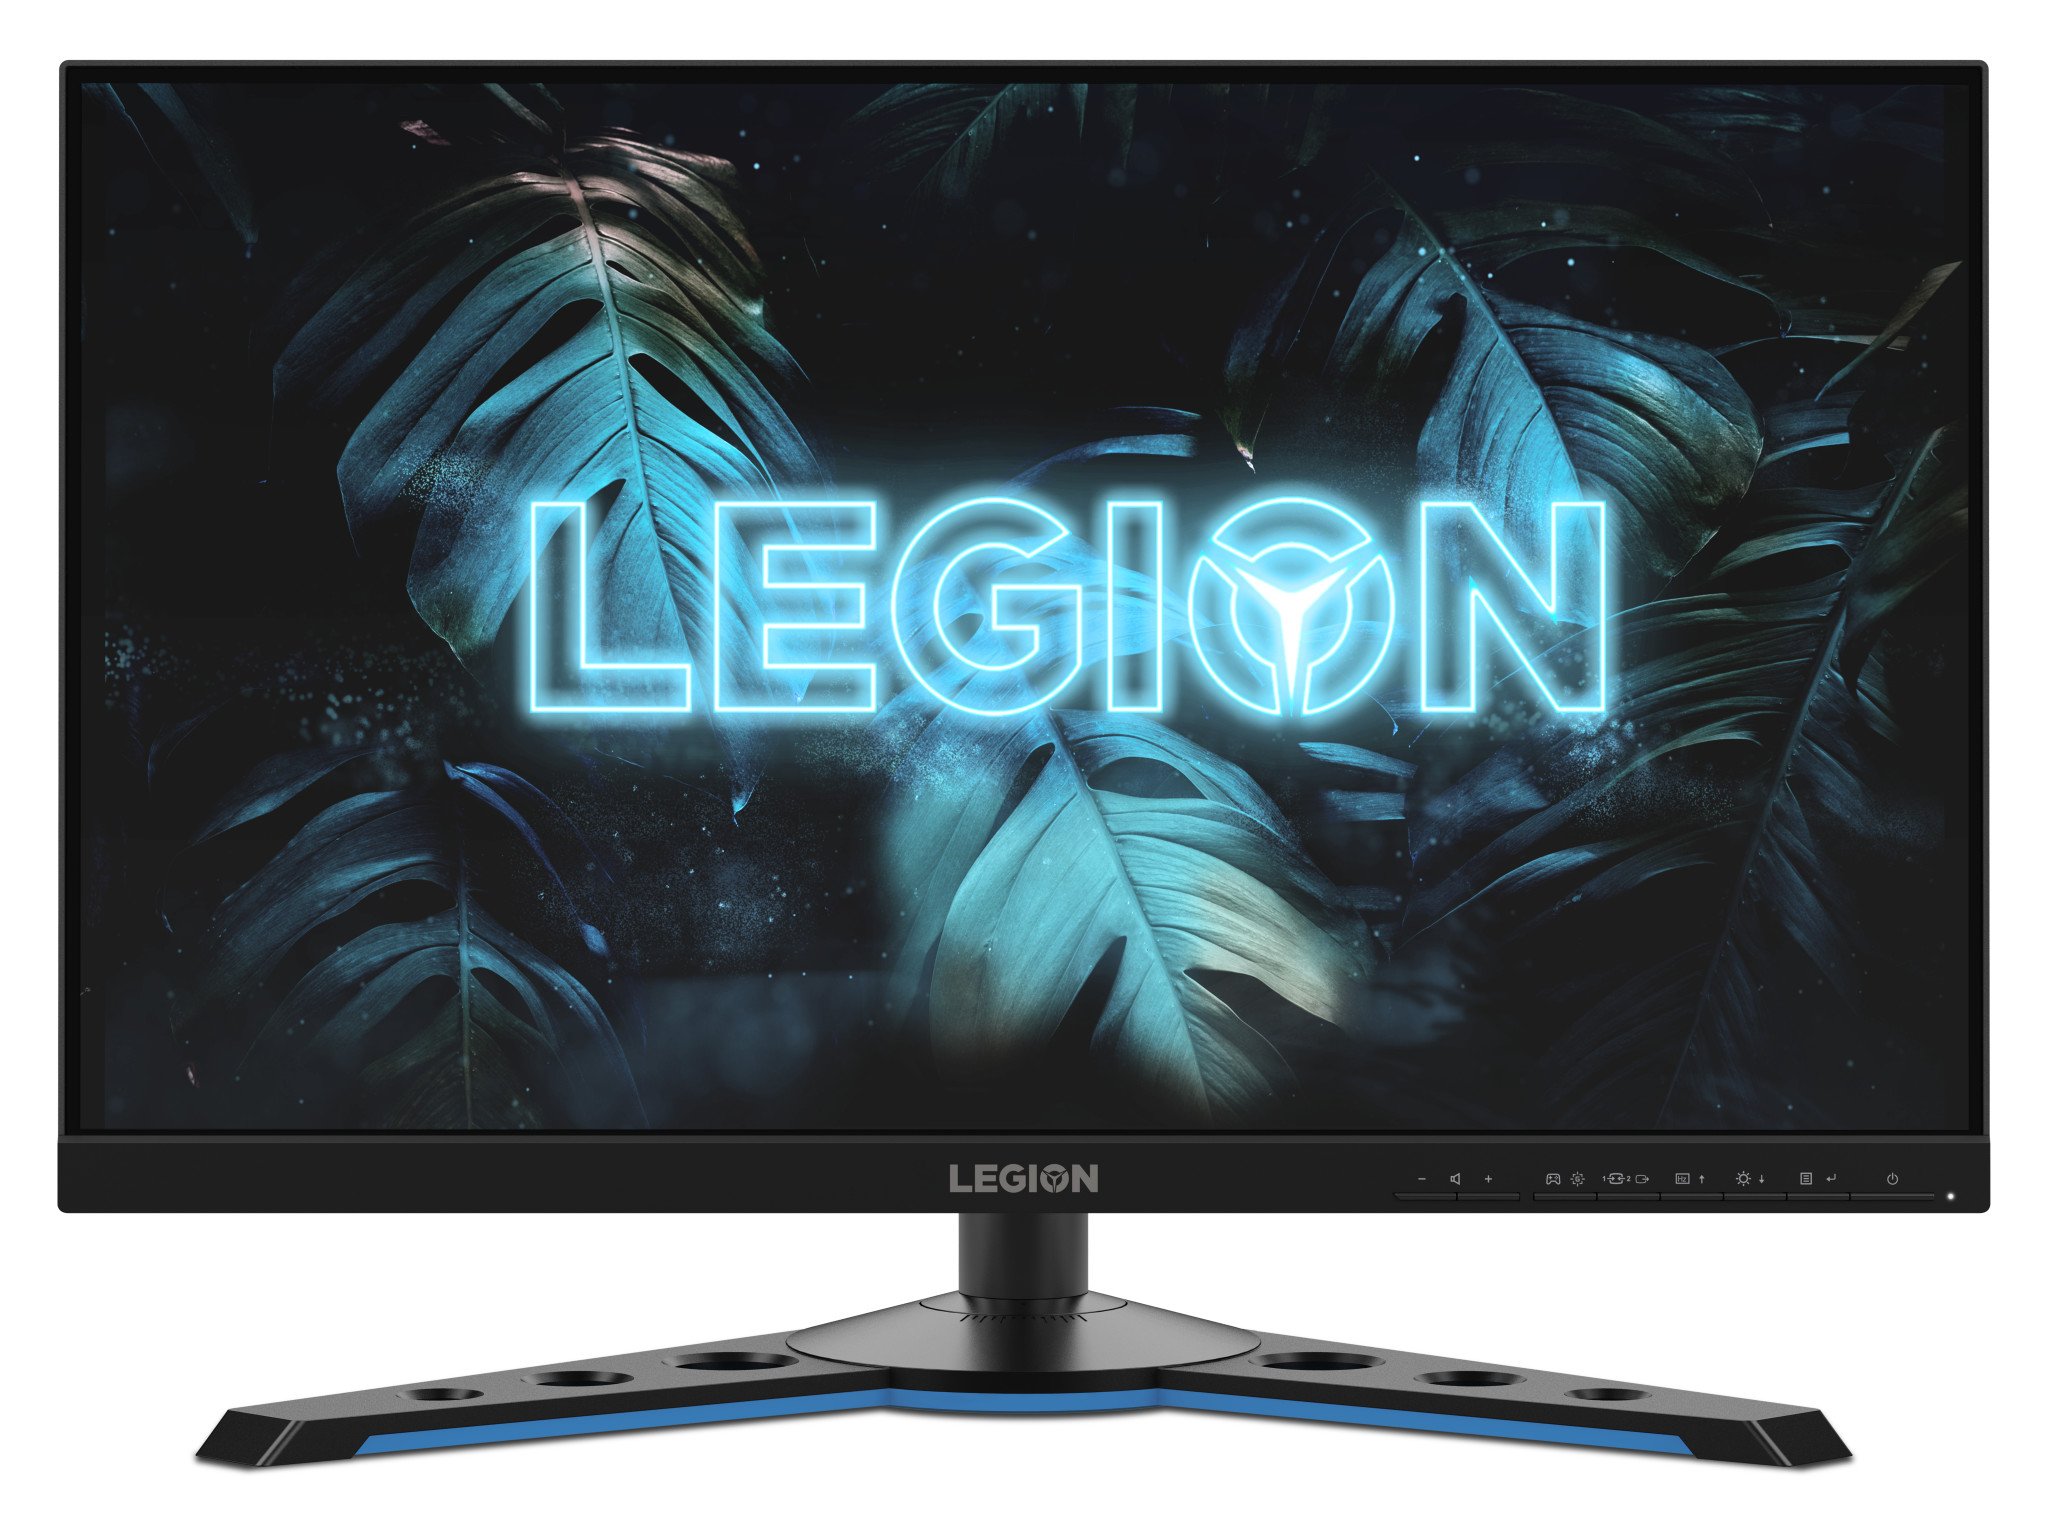 Lenovo Legion Y25g 30 Gaming Monitor Front Normal Position